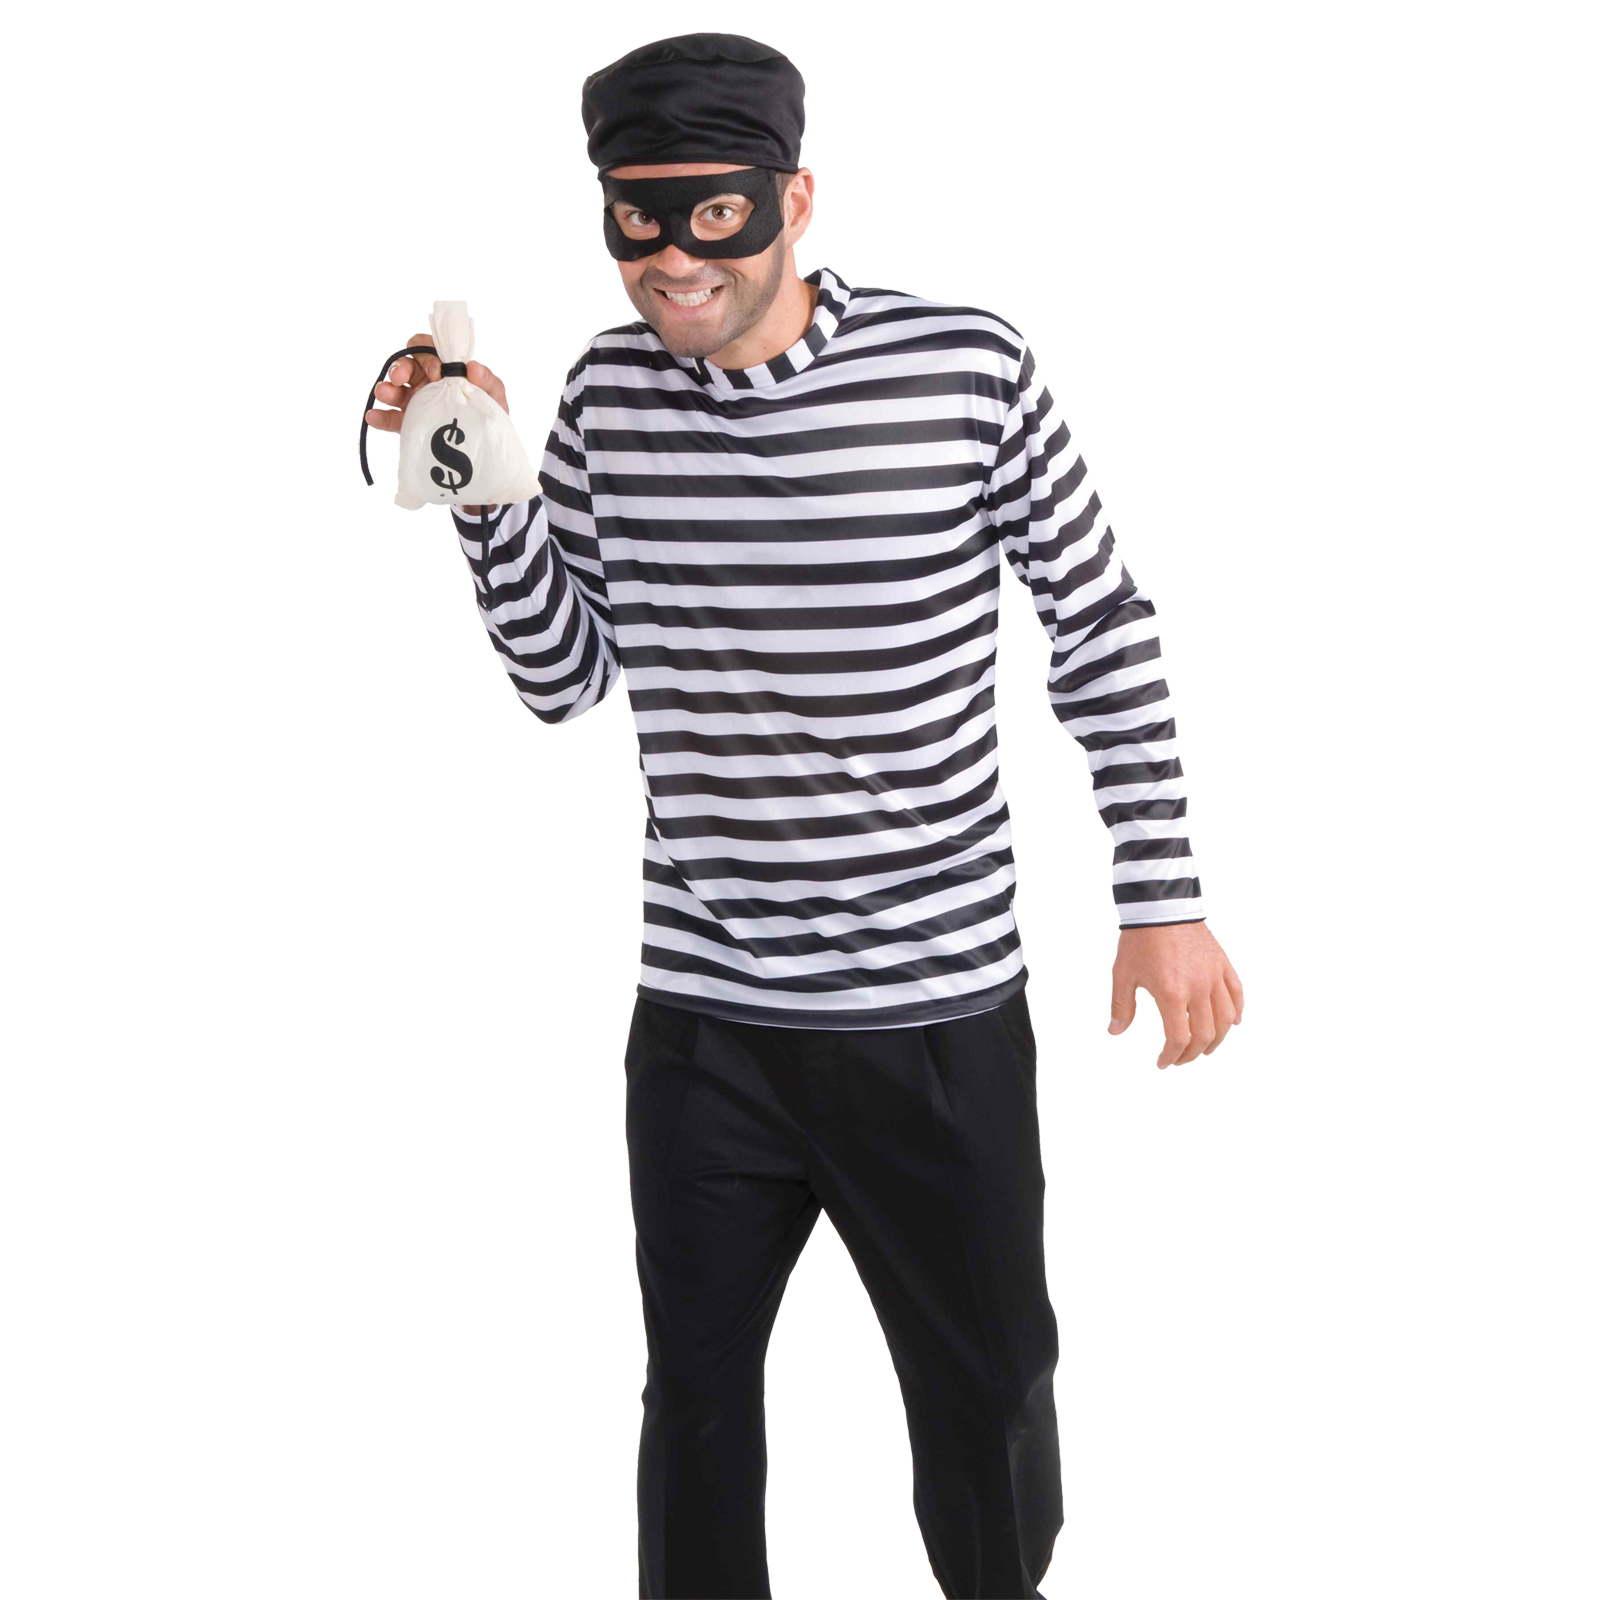 Men&#8217;s Burglar Costume Size: One Size Fits Most